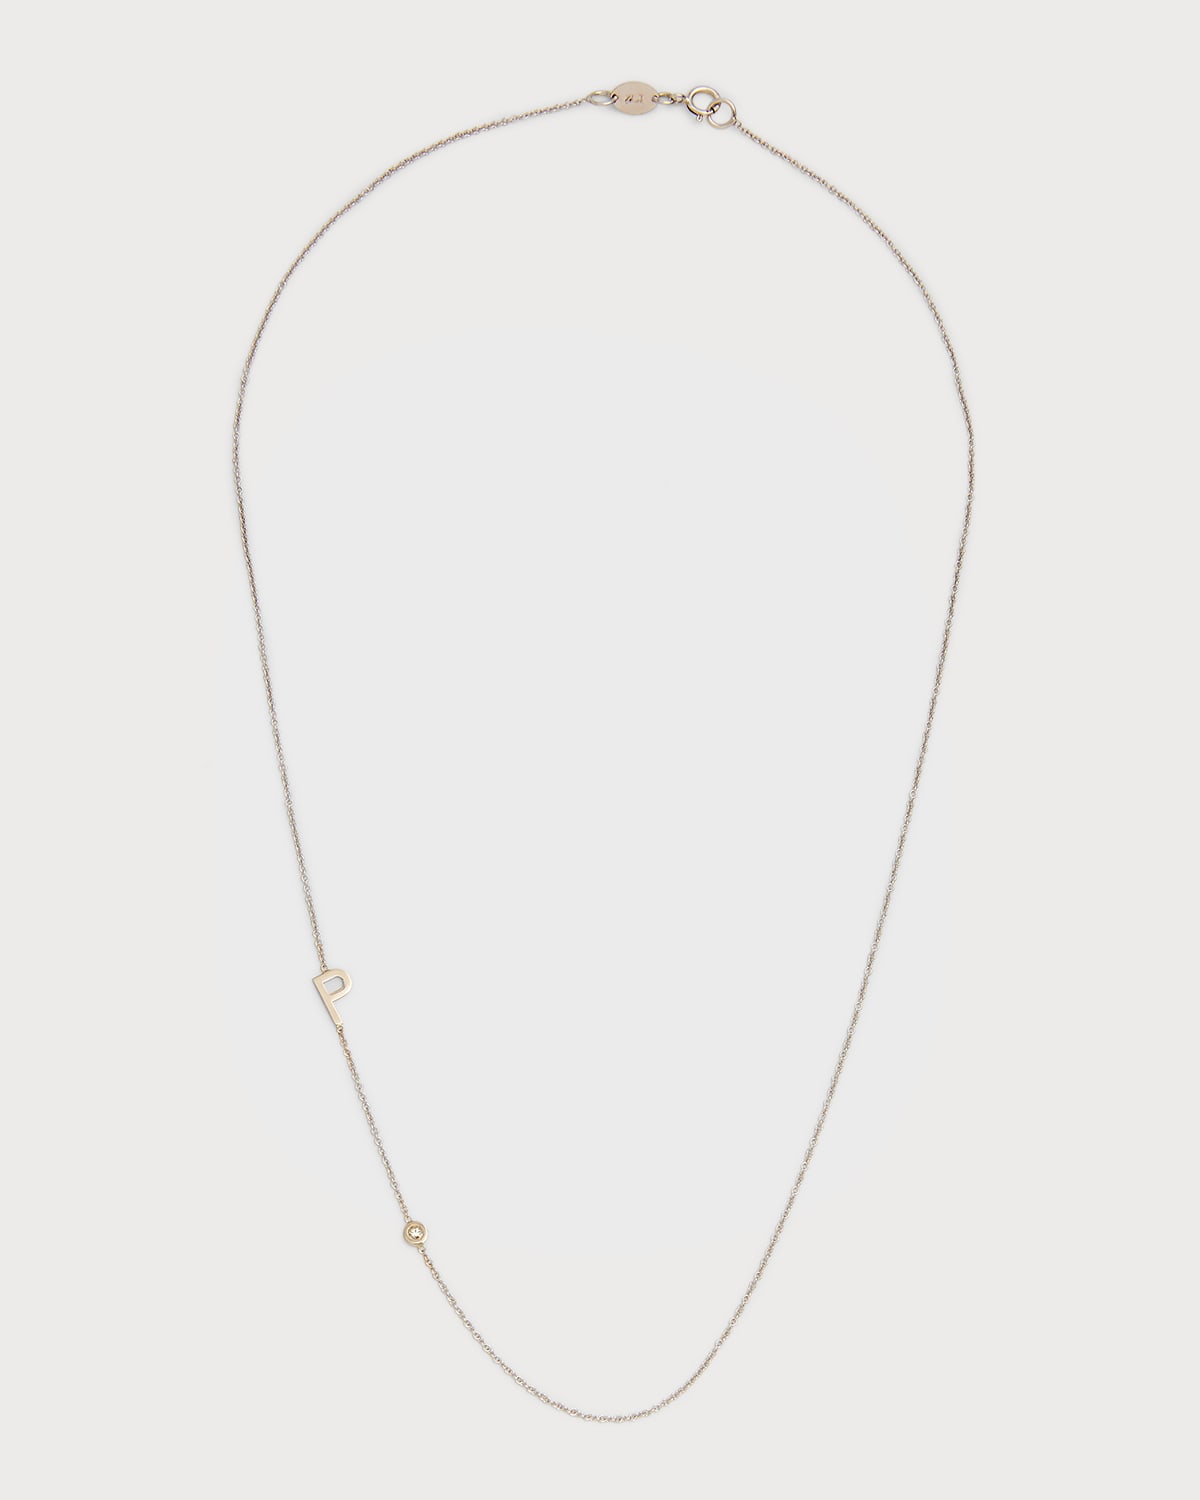 Zoe Lev Jewelry 14k White Gold Side Chic Personalized Asymmetric Initial & Diamond Bezel Necklace